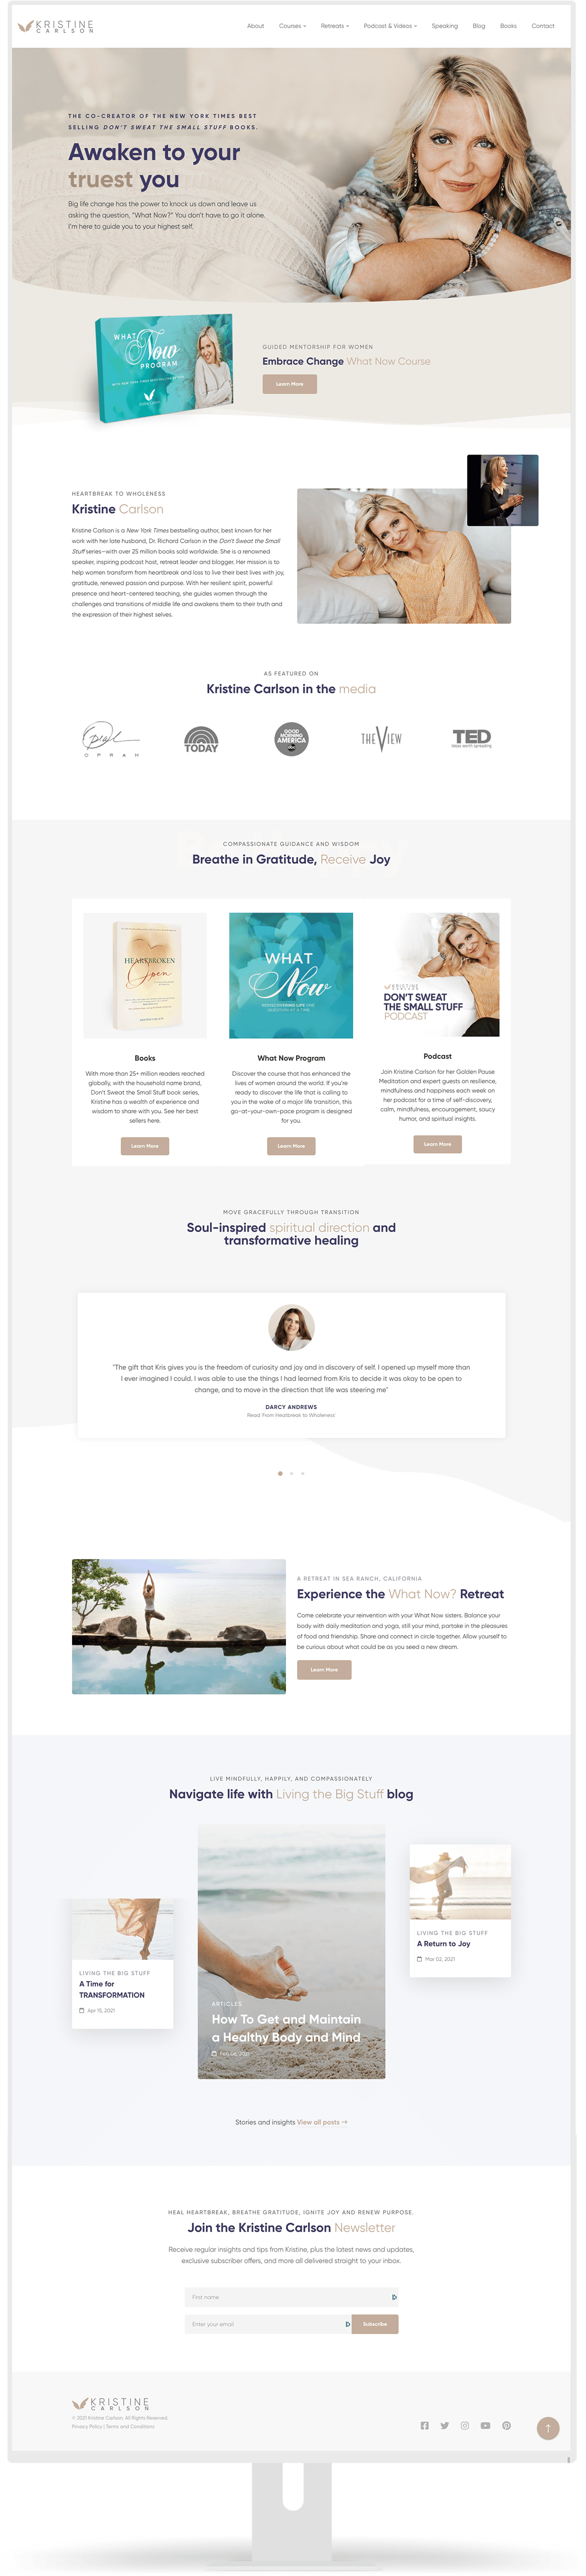 Kristine Carlson homepage website